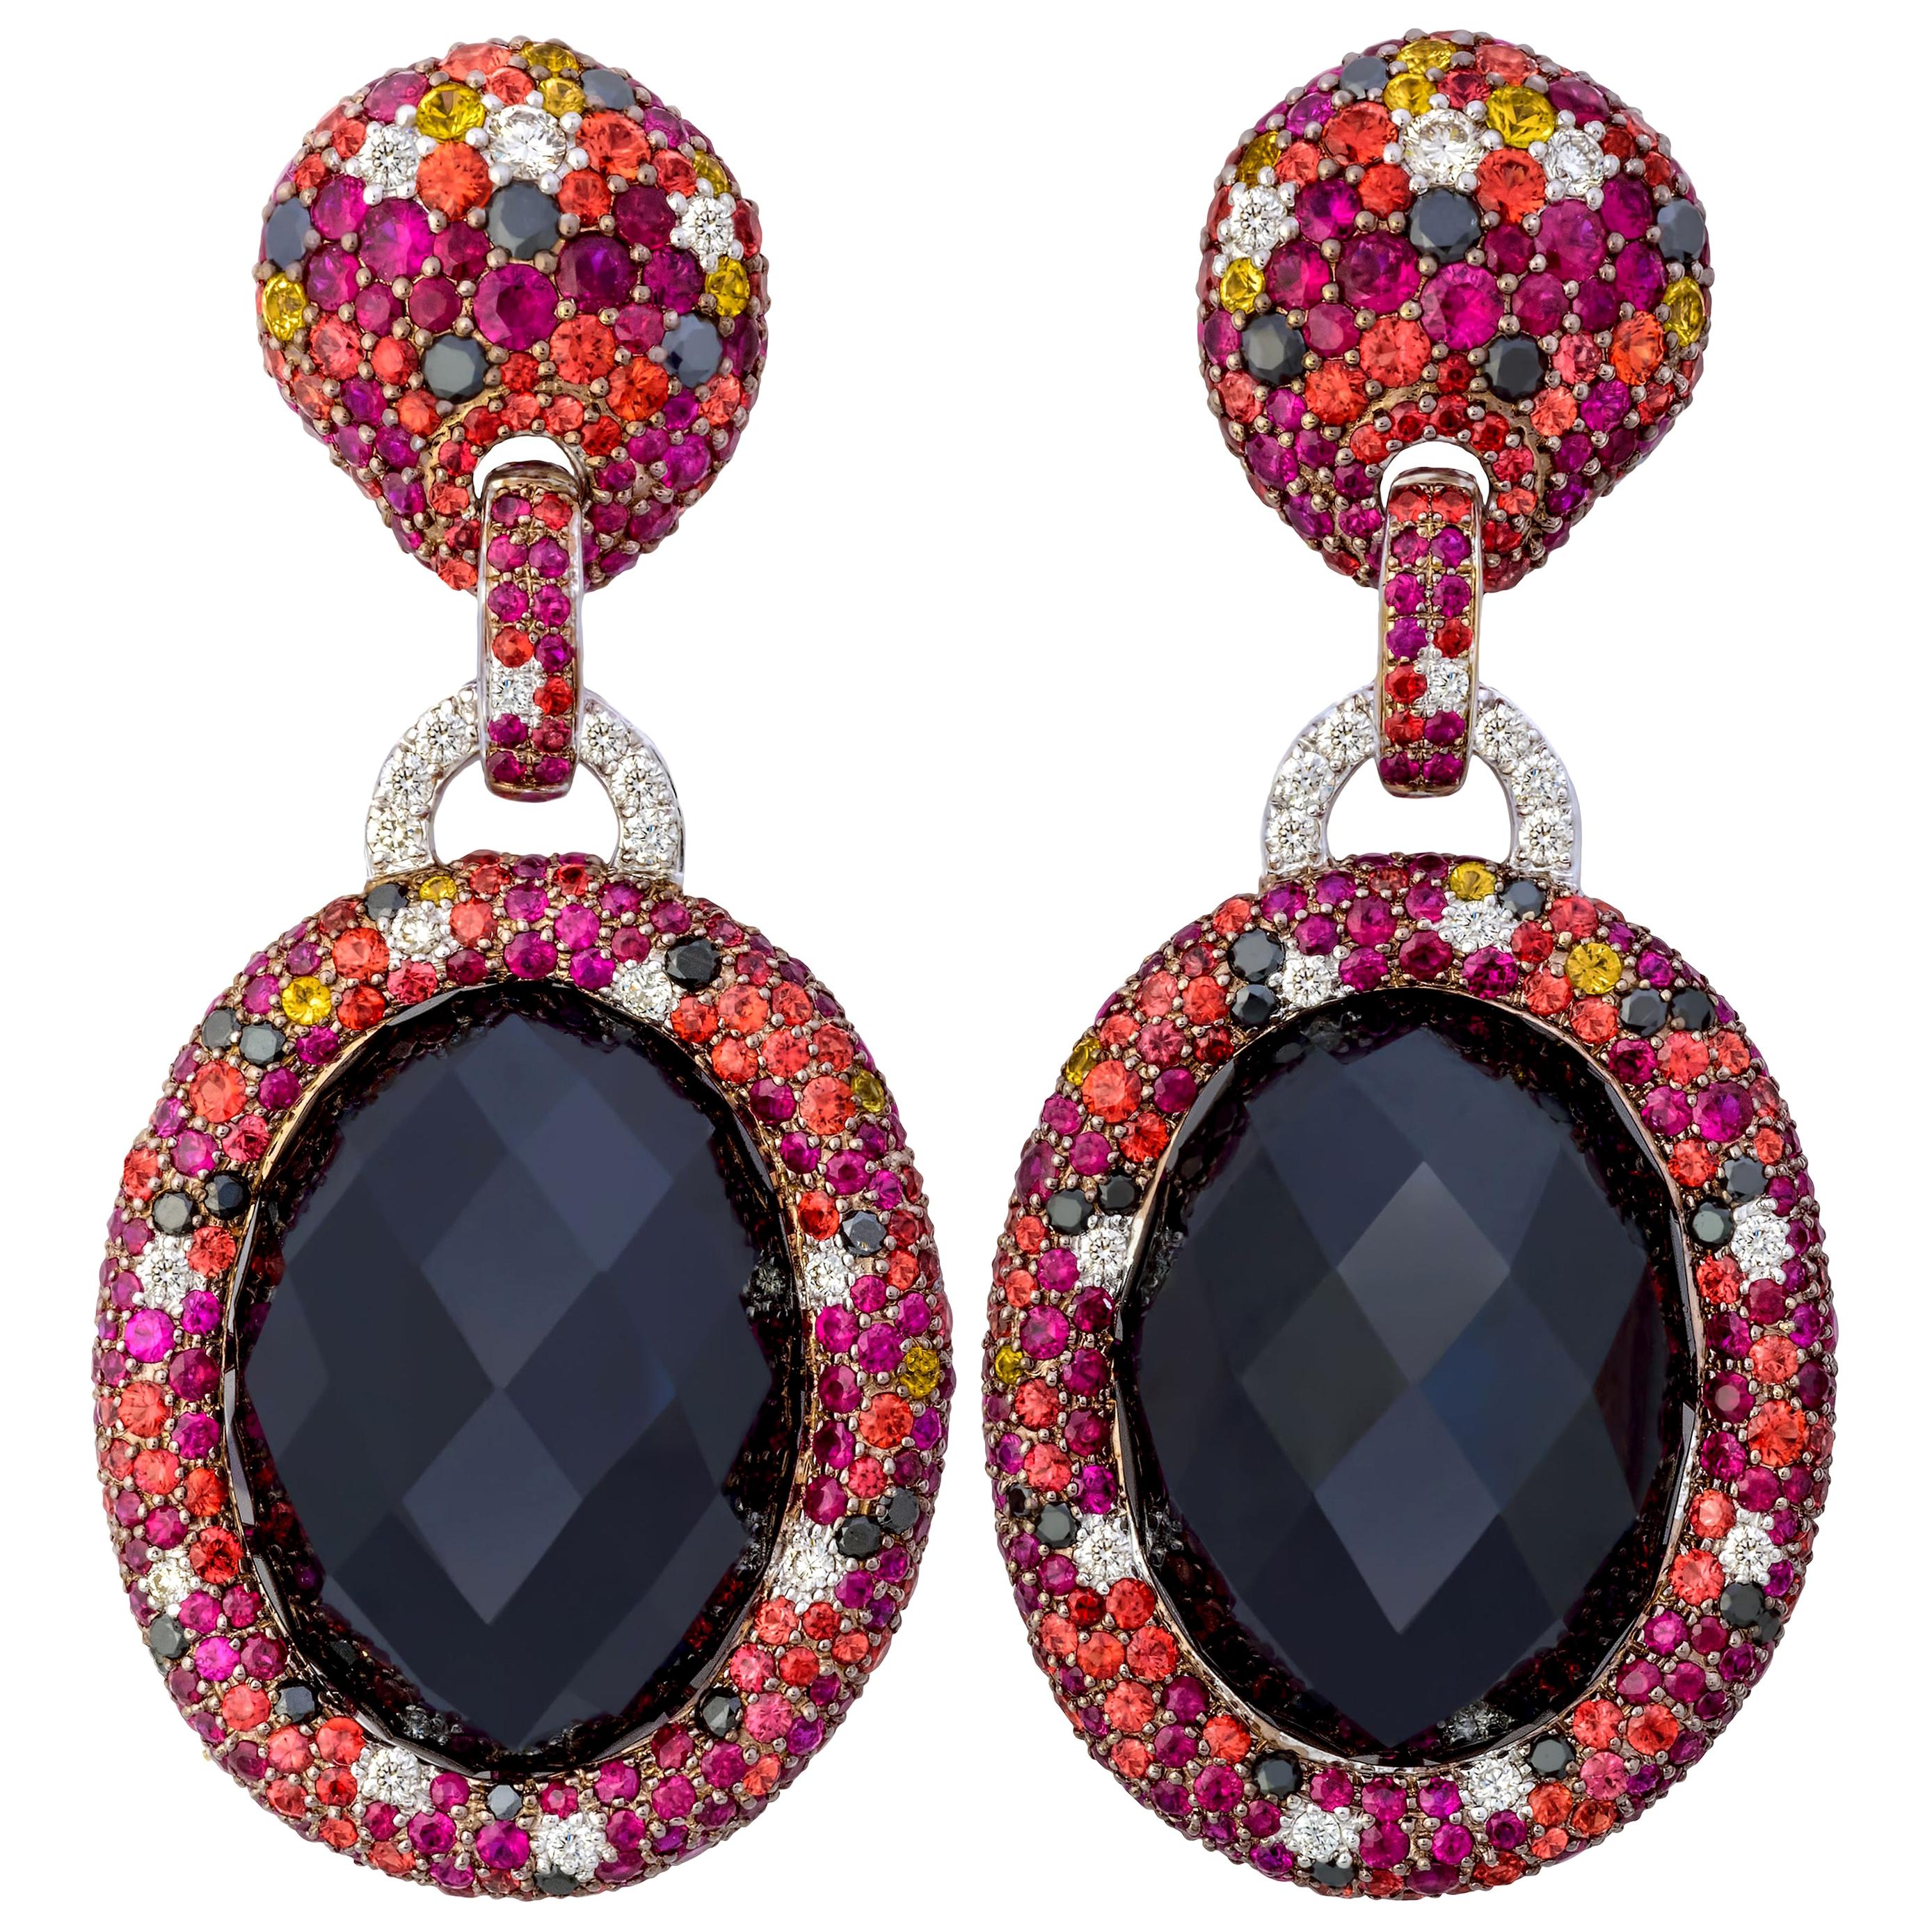 Margot McKinney 18K Gold 101.51ct Onyx Earrings with Diamonds, Rubies, Sapphires